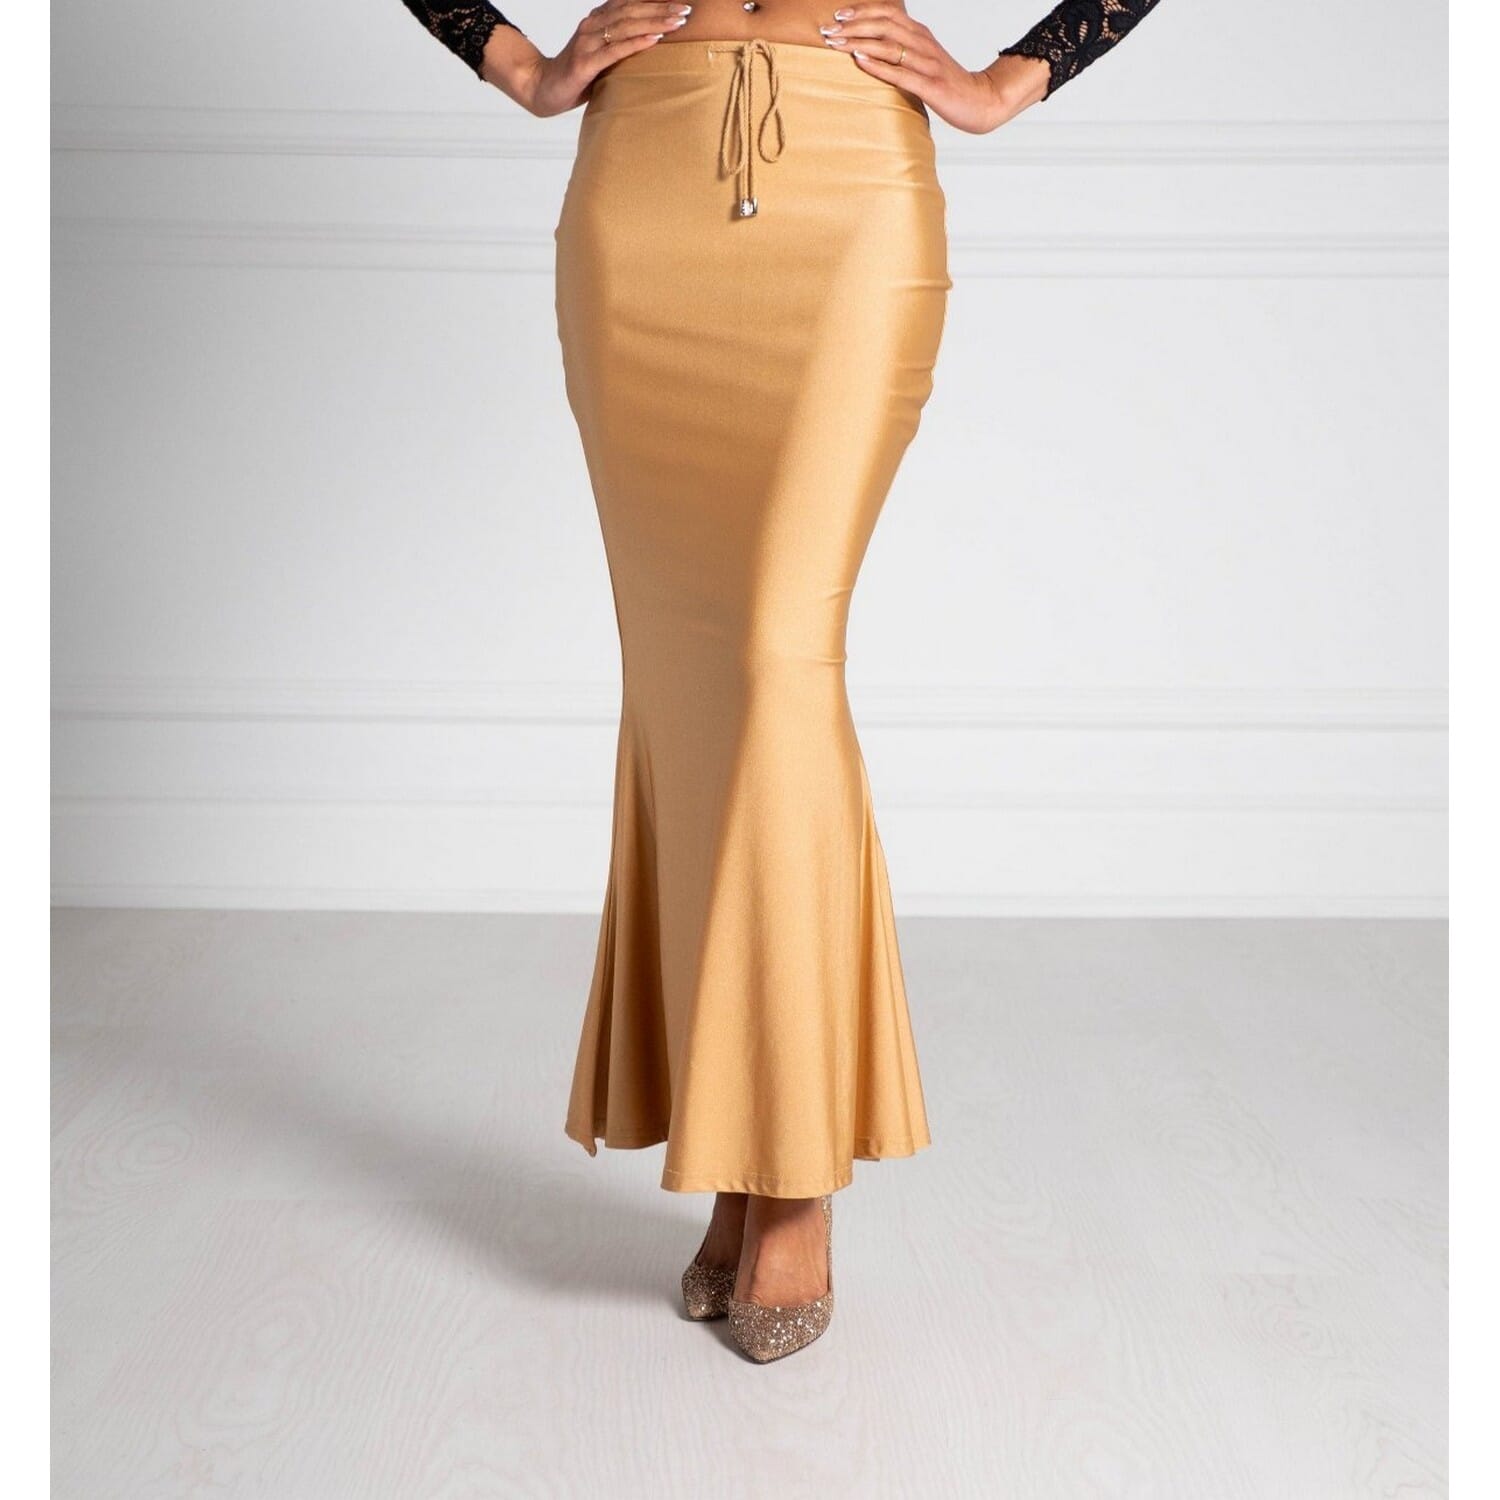 Buy Mehrang Lycra Saree Shapewear Petticoat for Women, Cotton